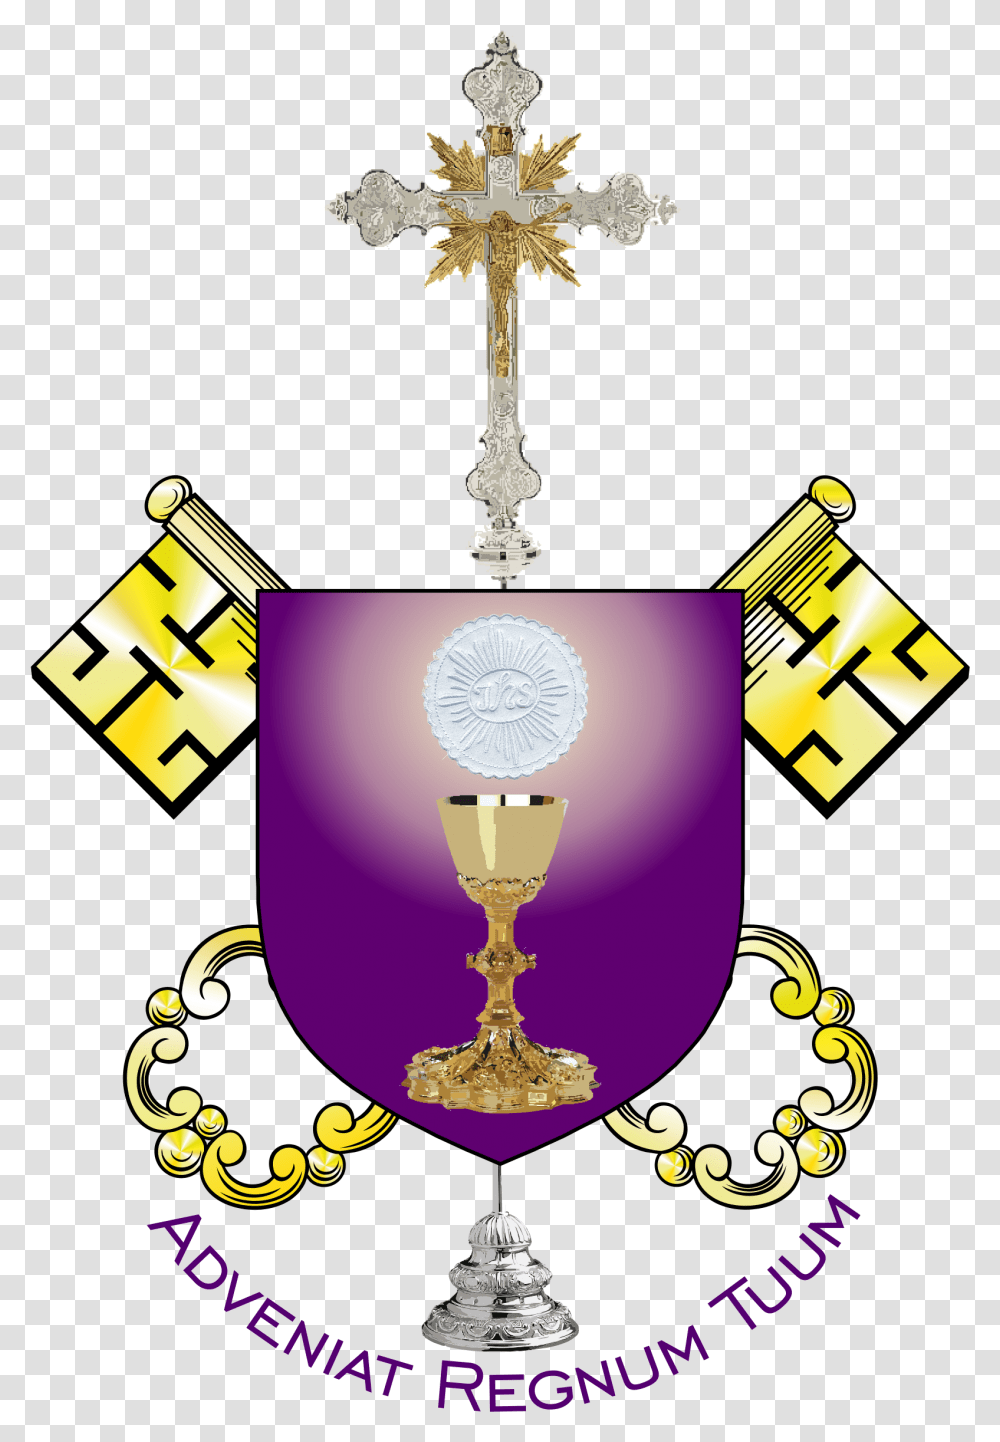 Fileocac Coat Of Armspng Wikipedia Emblem, Cross, Symbol, Chandelier, Lamp Transparent Png